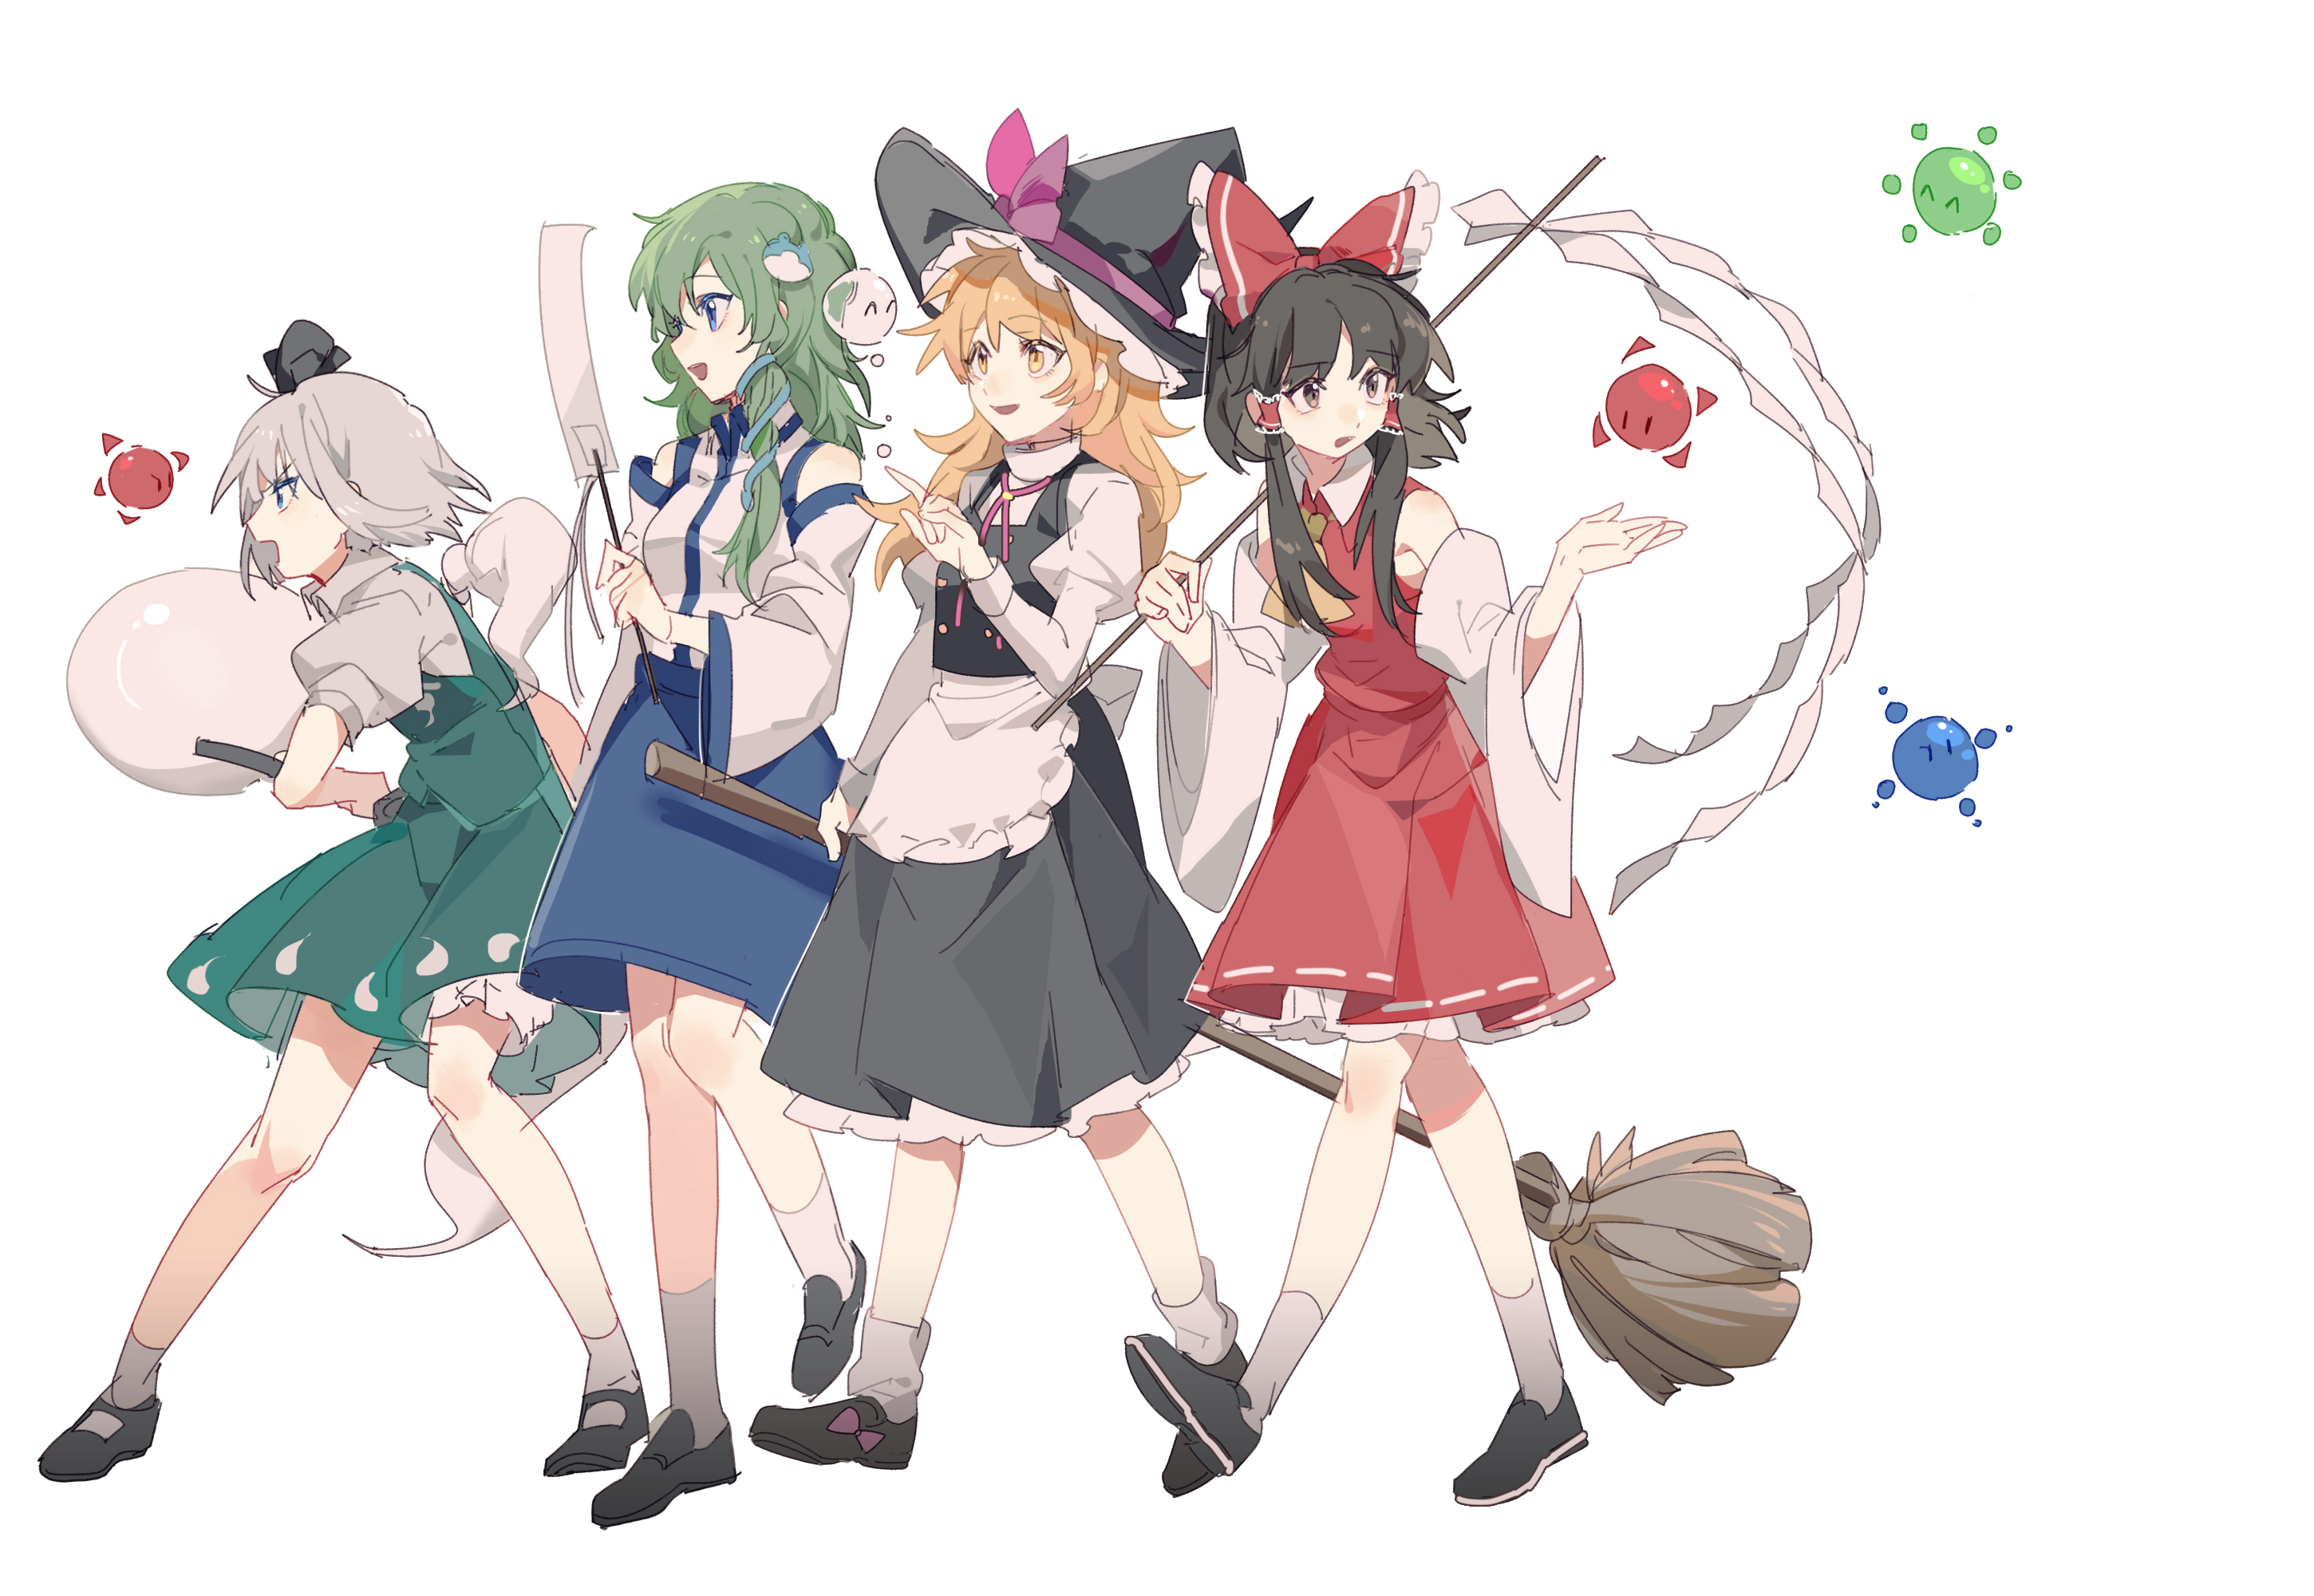 Baixe gratuitamente a imagem Anime, Touhou, Youmu Konpaku, Sanae Kochiya, Reimu Hakurei, Marisa Kirisame na área de trabalho do seu PC